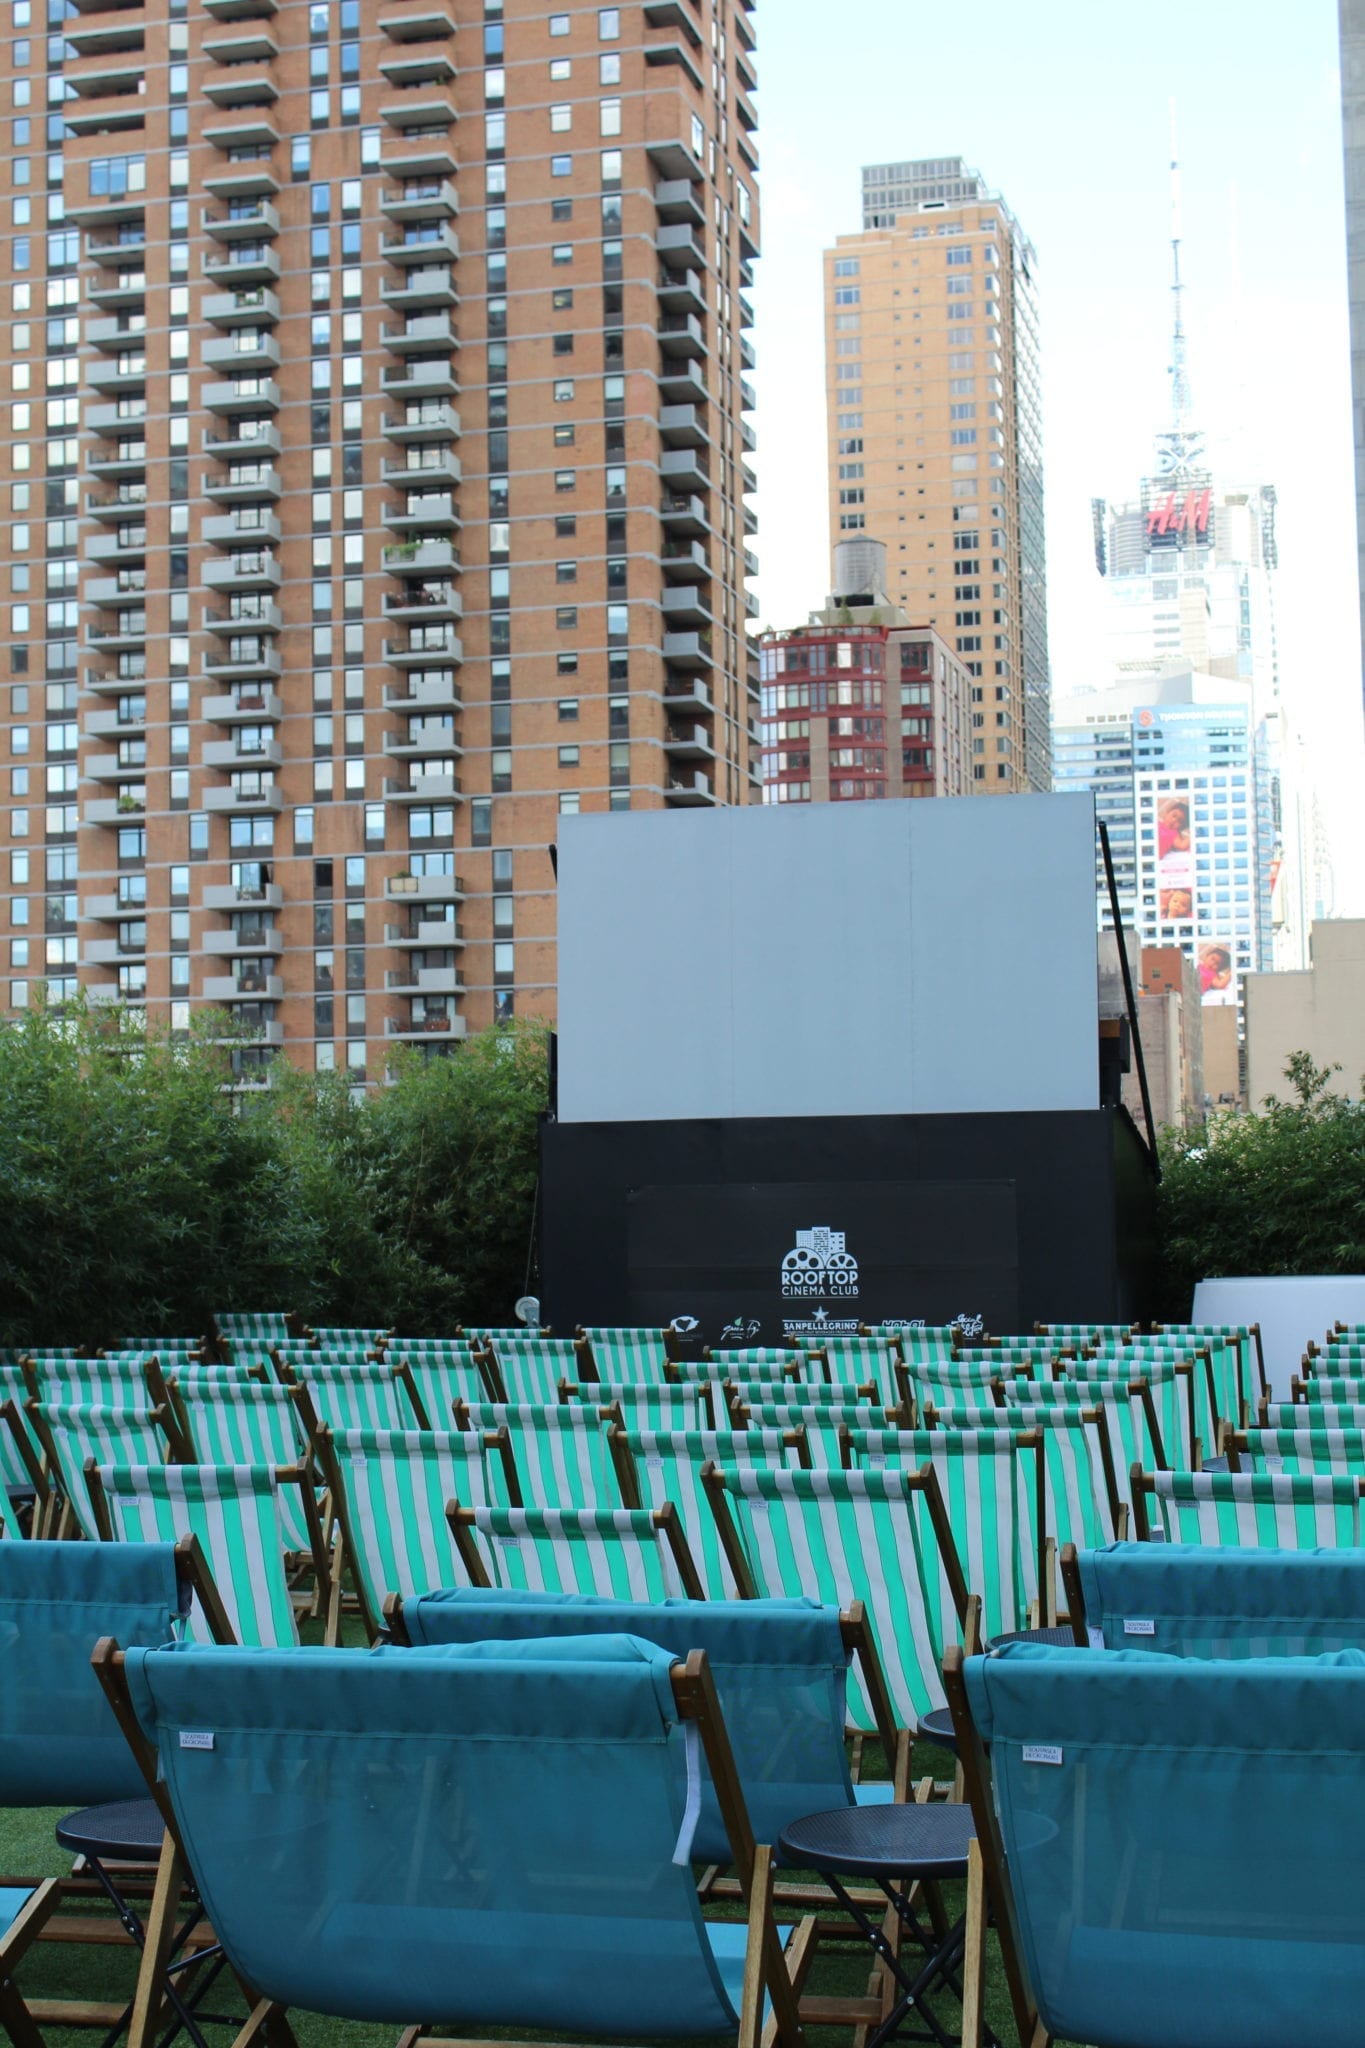 NYC rooftop outdoor movies at YOTEL | Goodtomicha.com